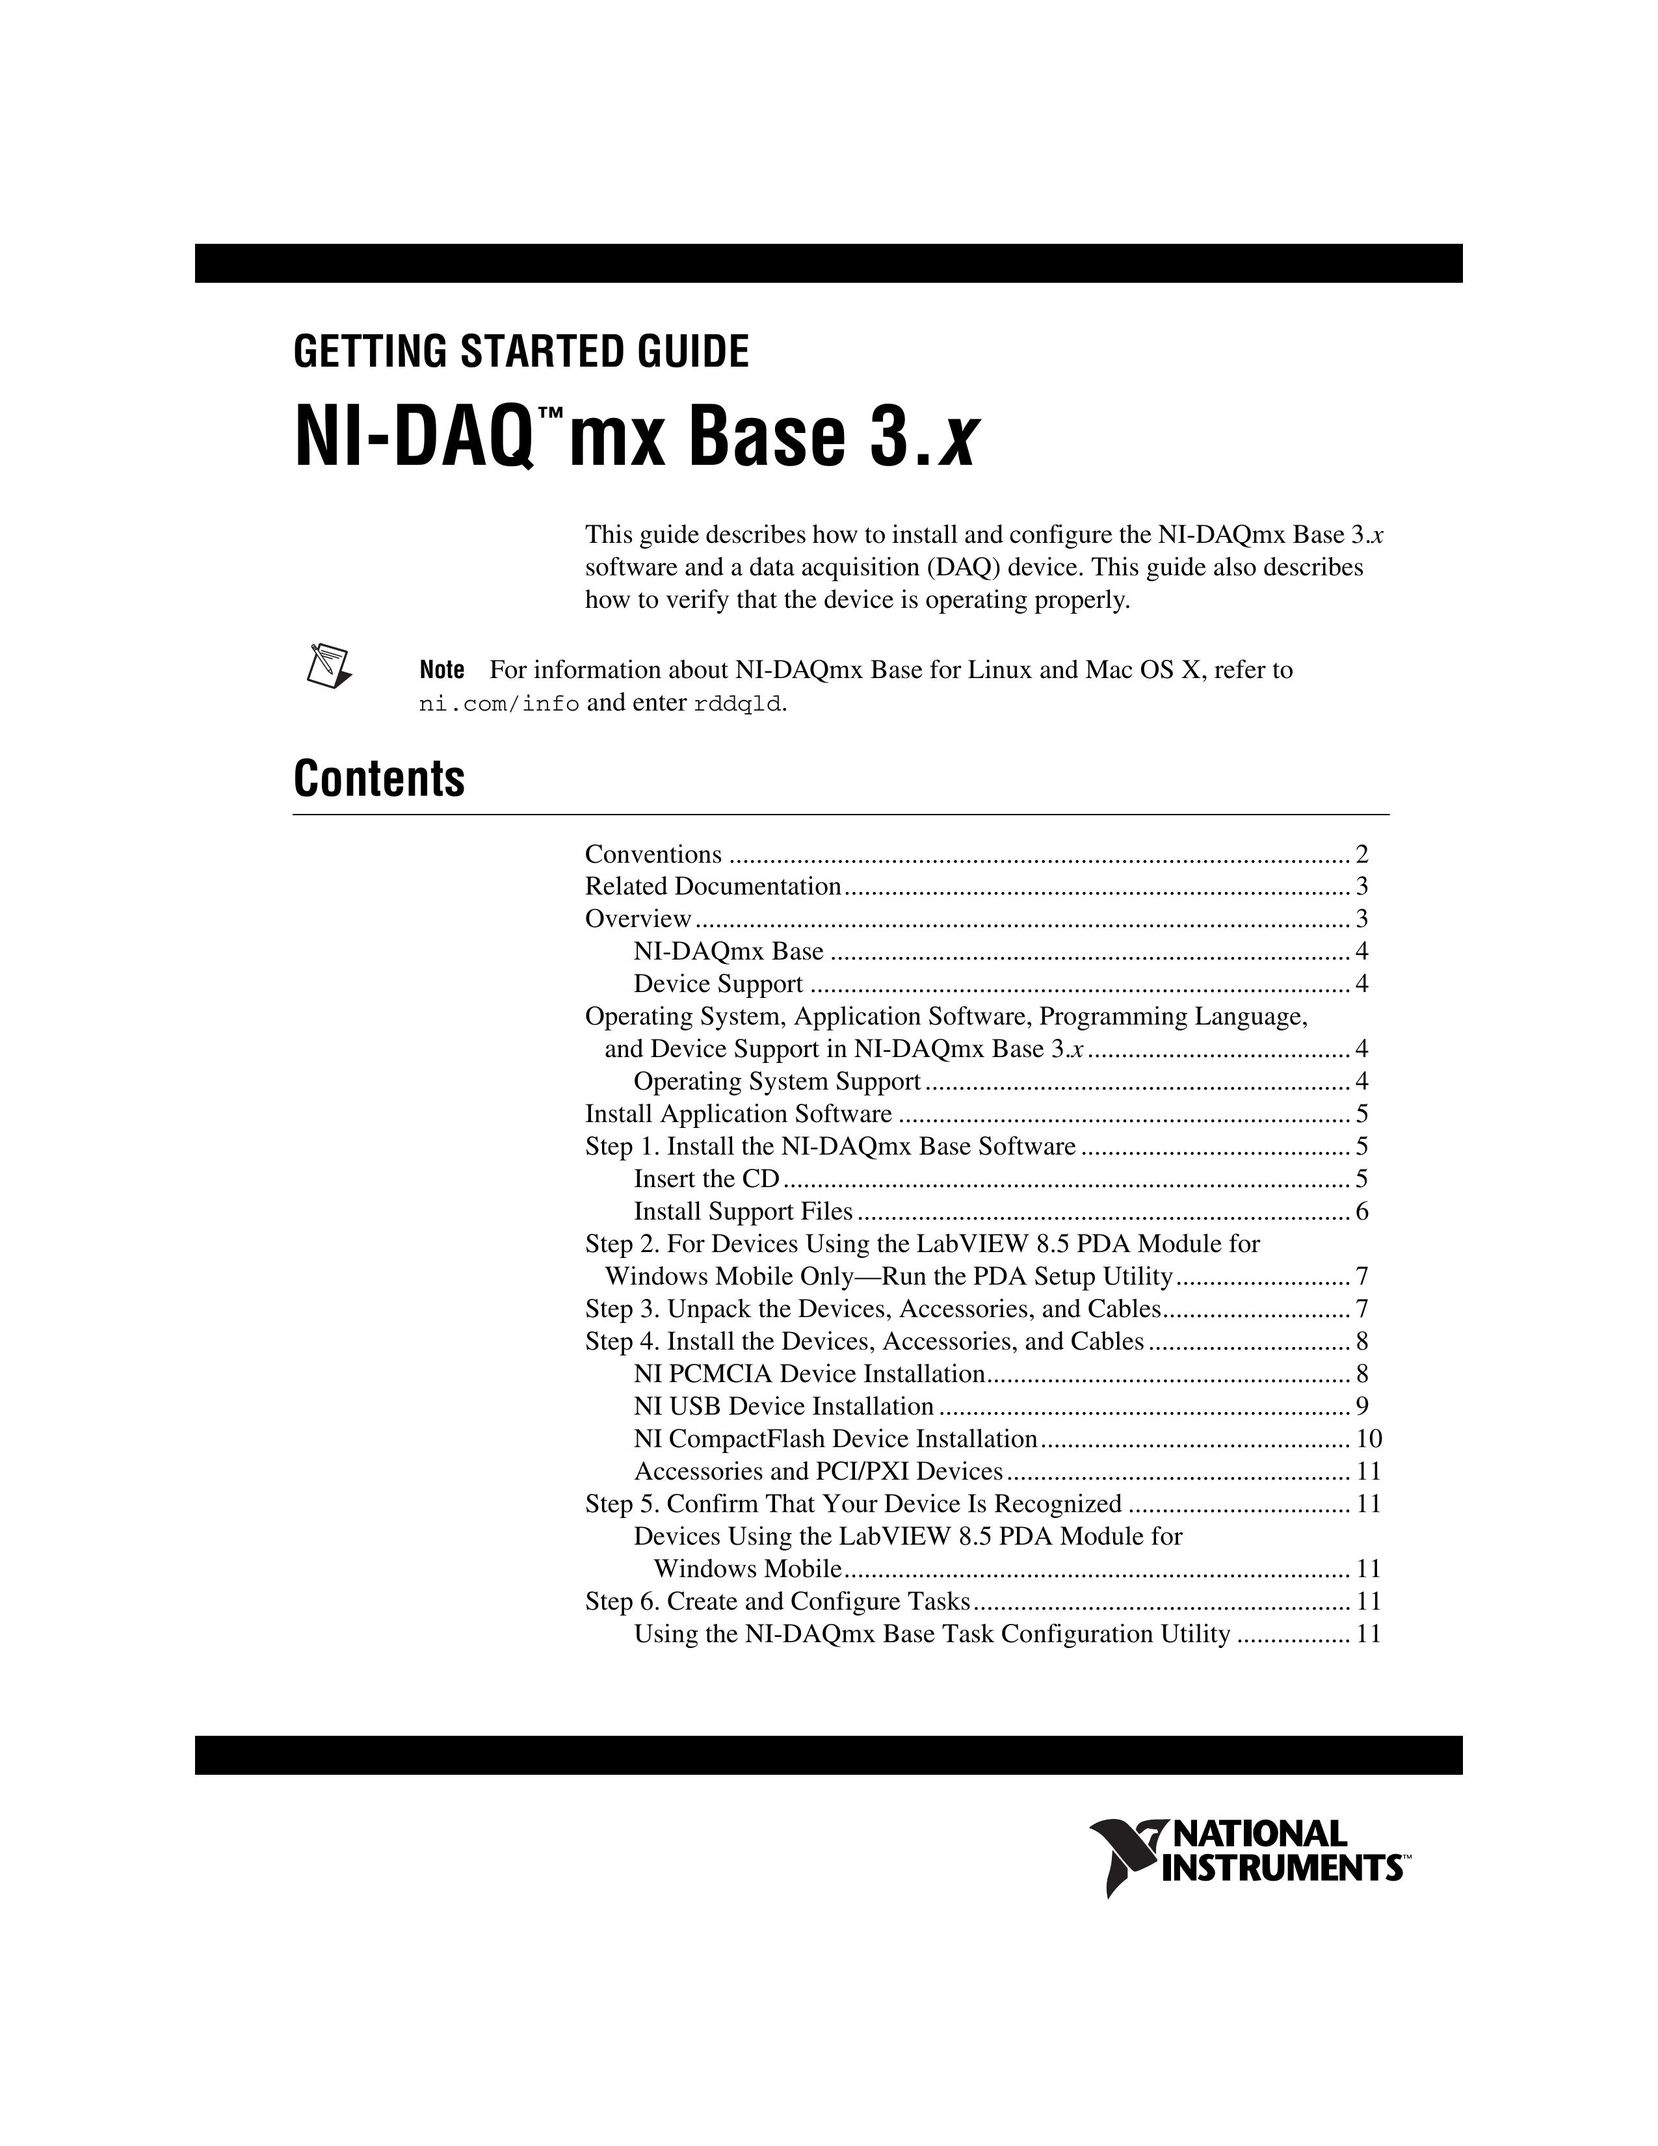 National Instruments NI-DAQ mx Base Computer Accessories User Manual